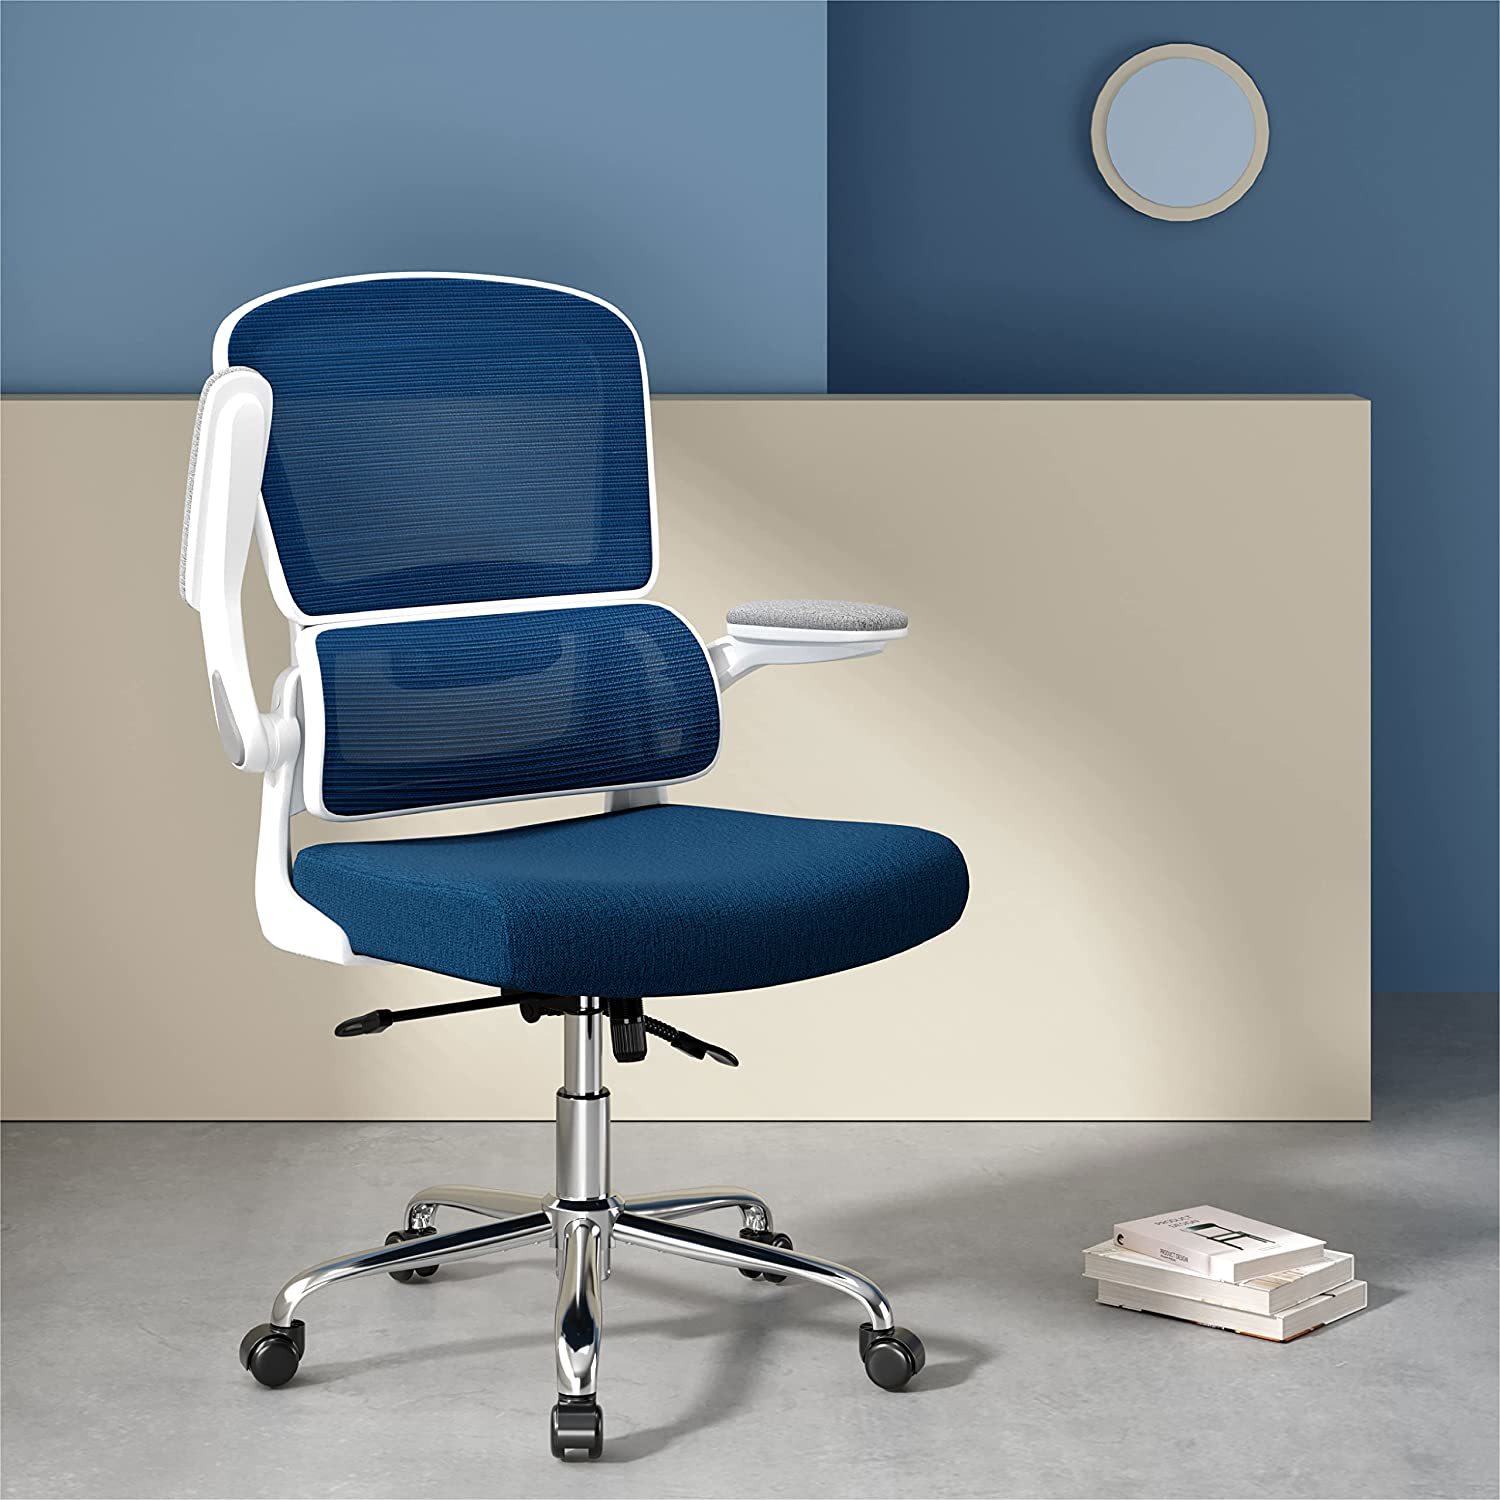 Logicfox Ergonomic Office Chair, Office Chair with Flip-up Arms, 2D Lumbar - $246.99